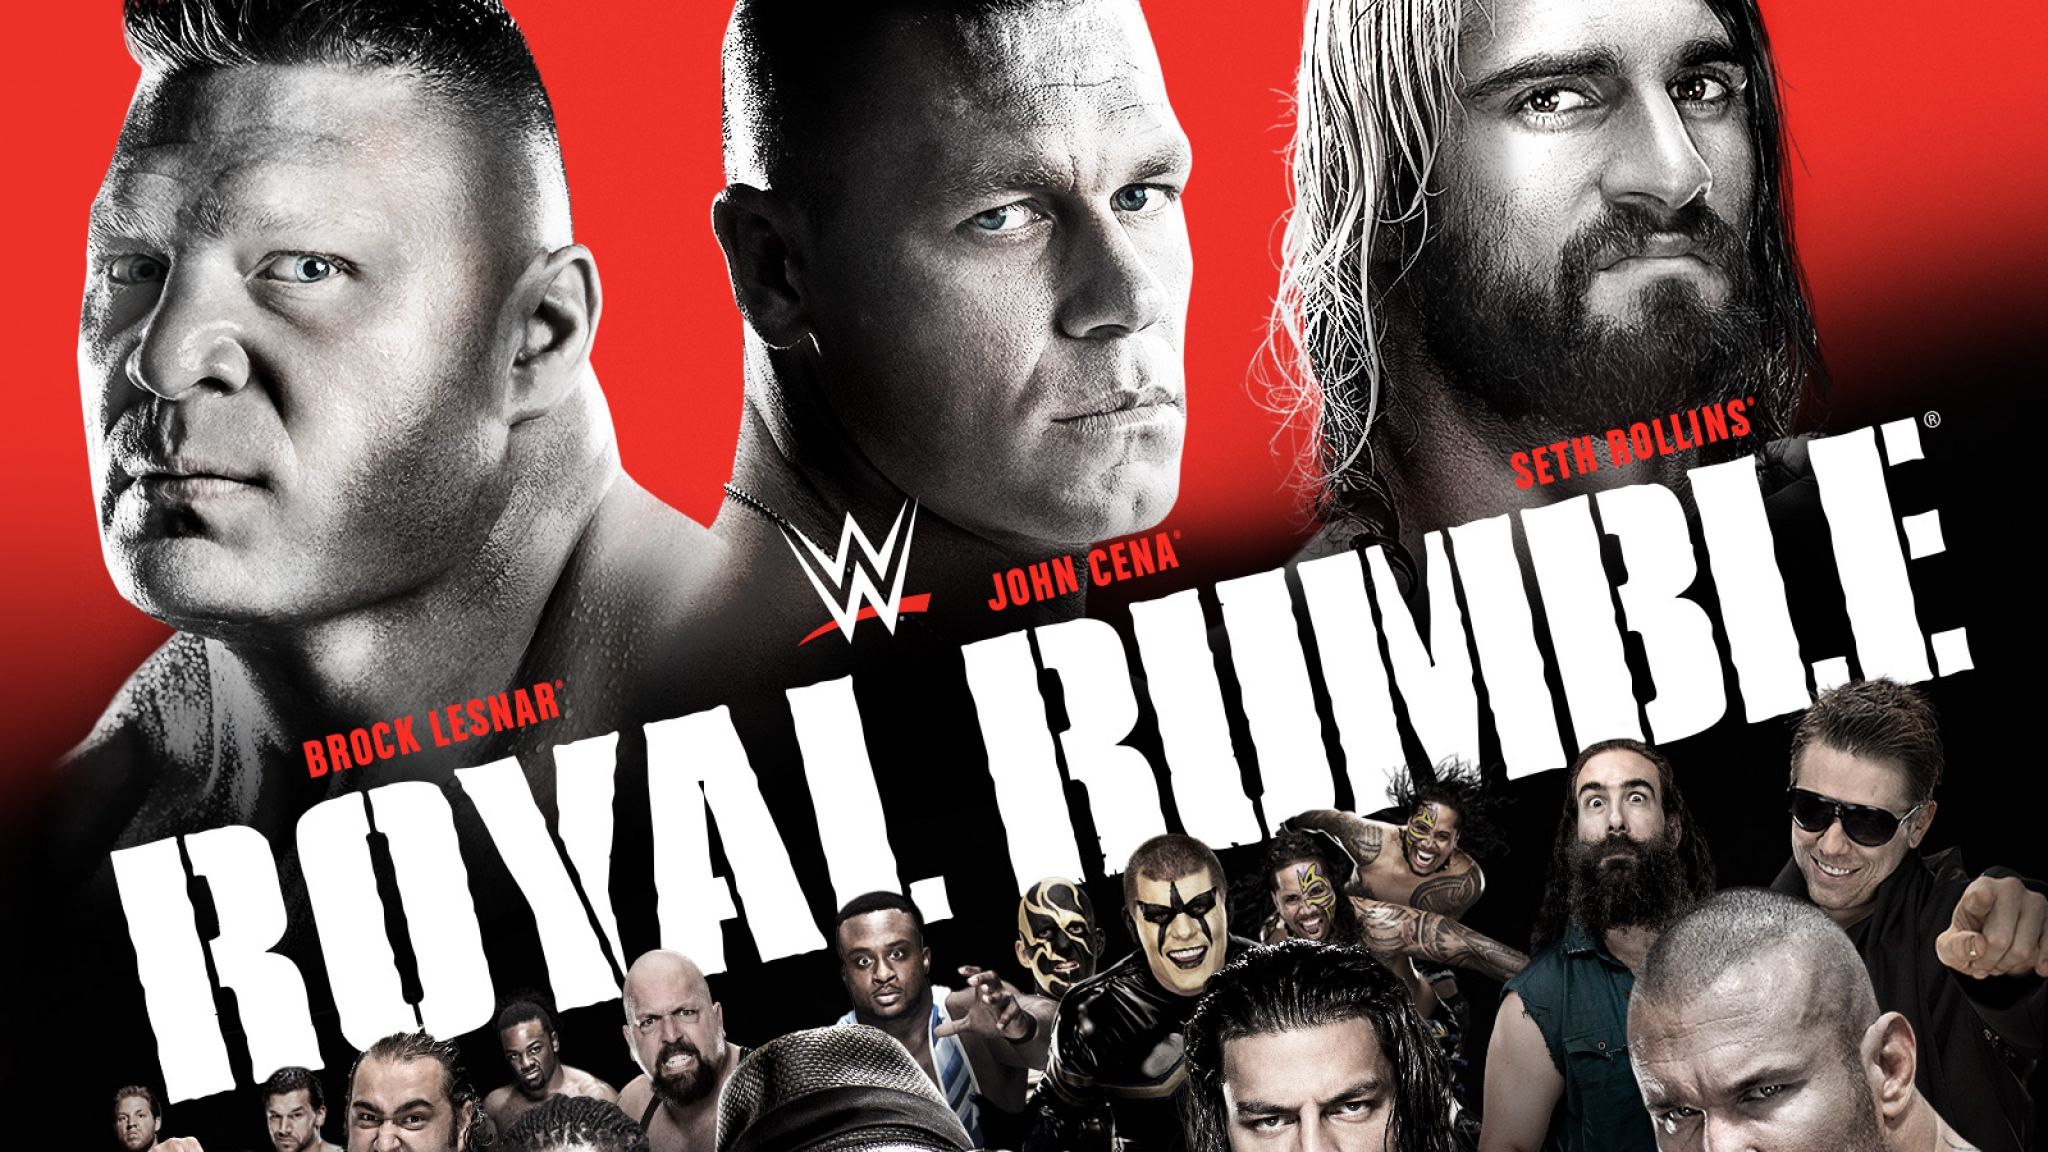 Download Download Wwe John Cena Wallpaper For Android #fhRvI ...